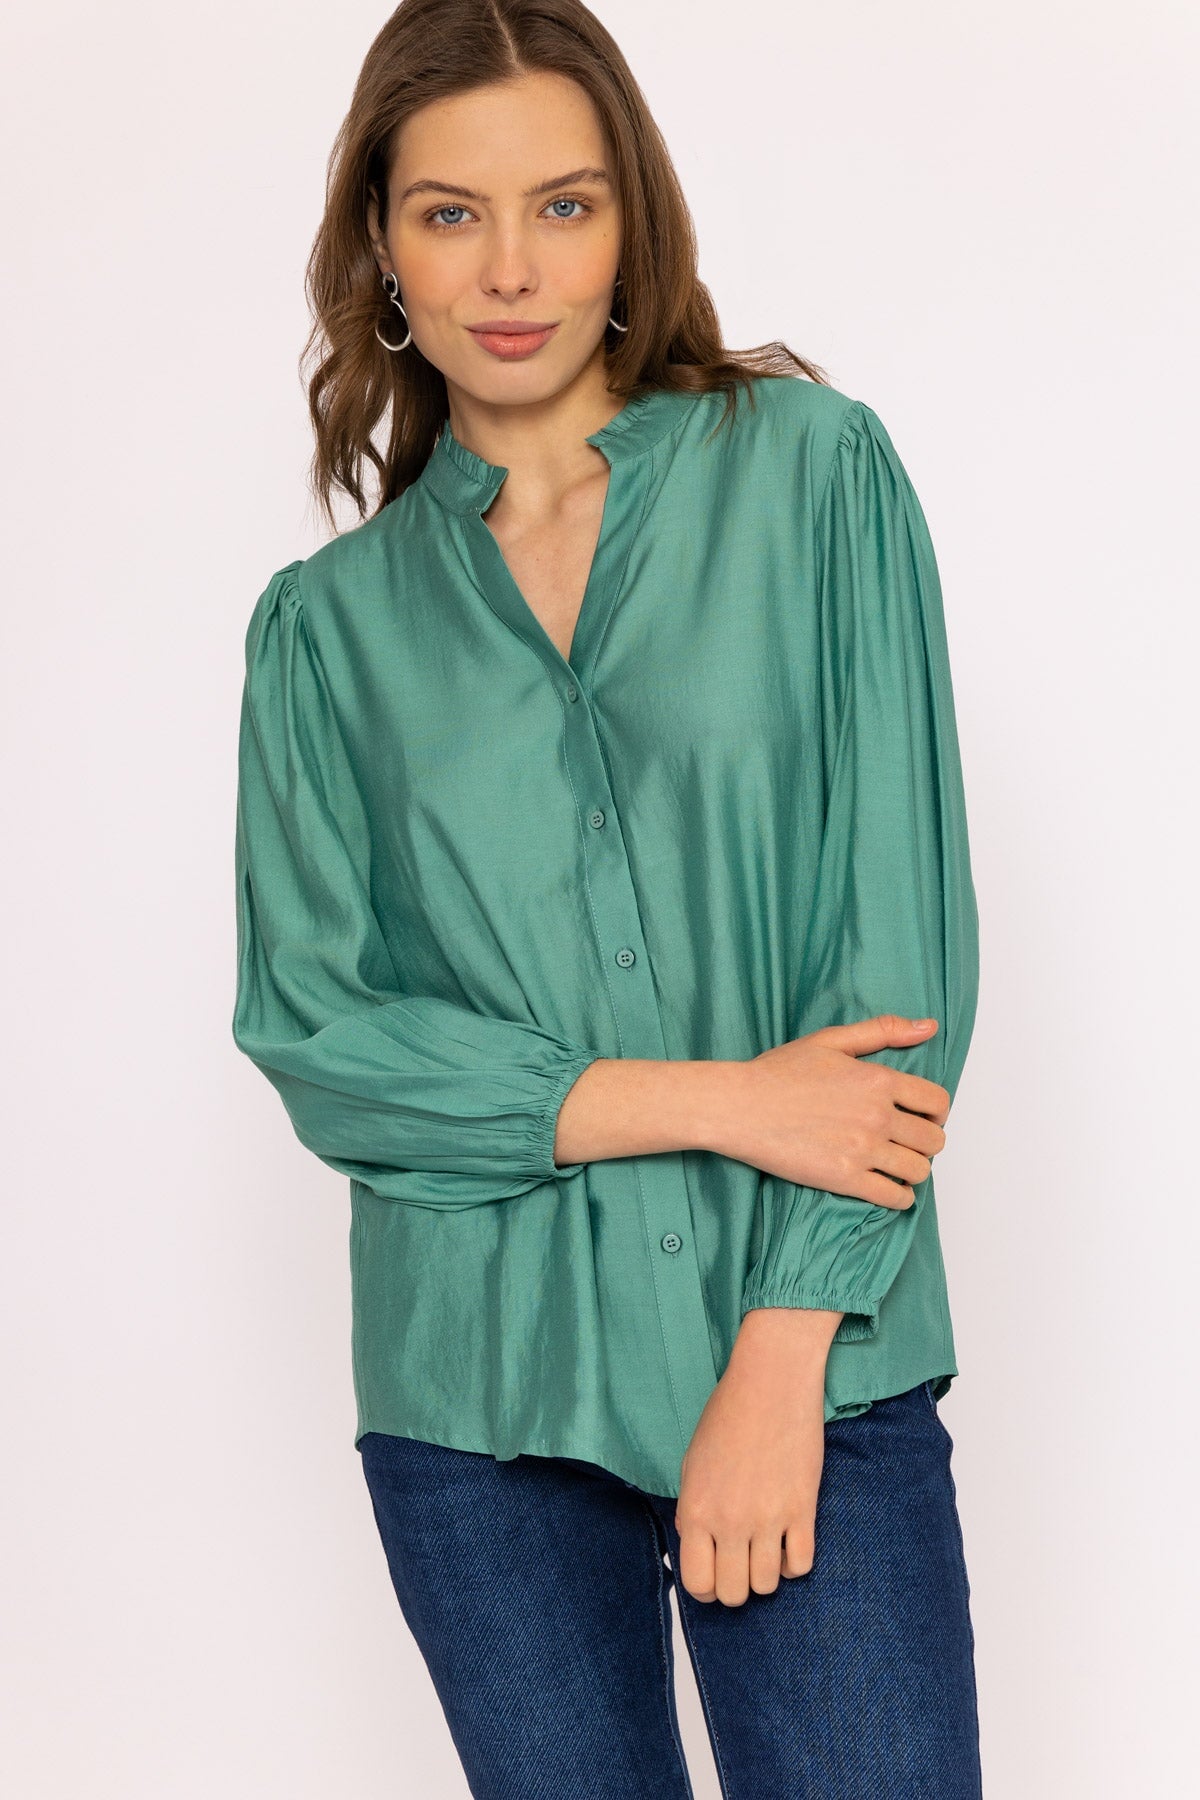 Long Sleeve Spring Blouse in Green - Shirts | Carraig Donn